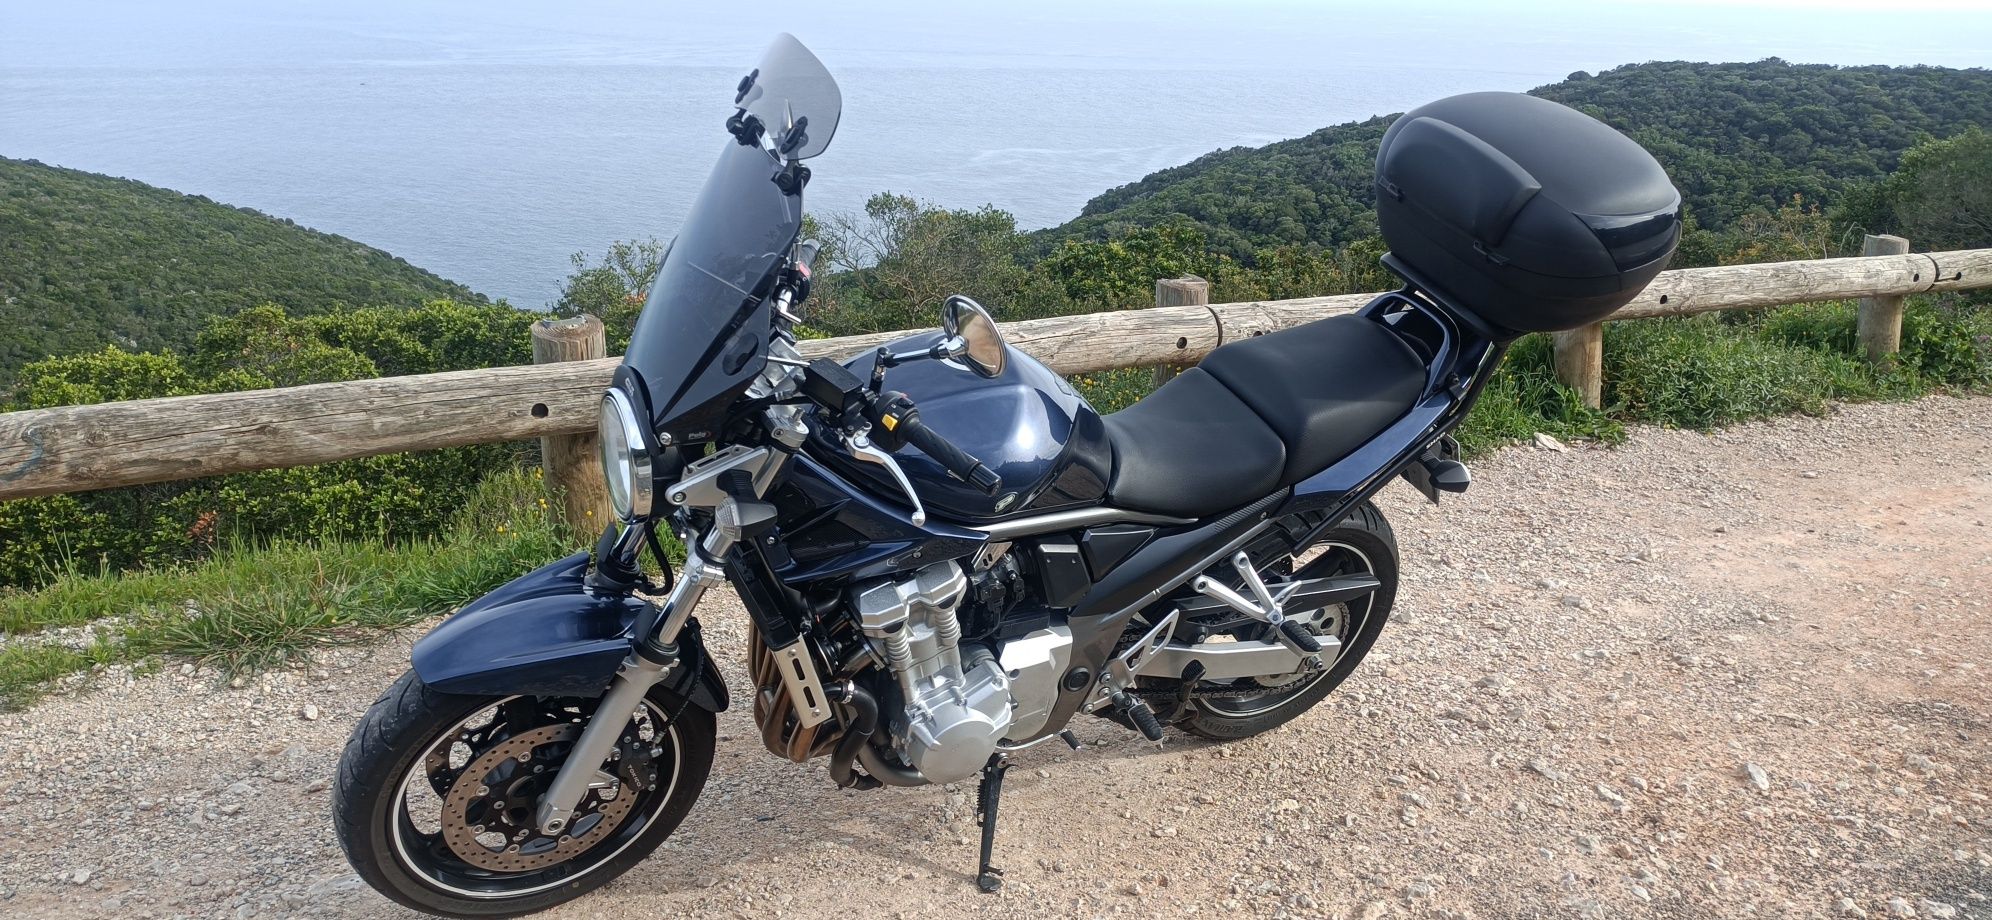 Suzuki bandit gsf 650, 2007 injeção